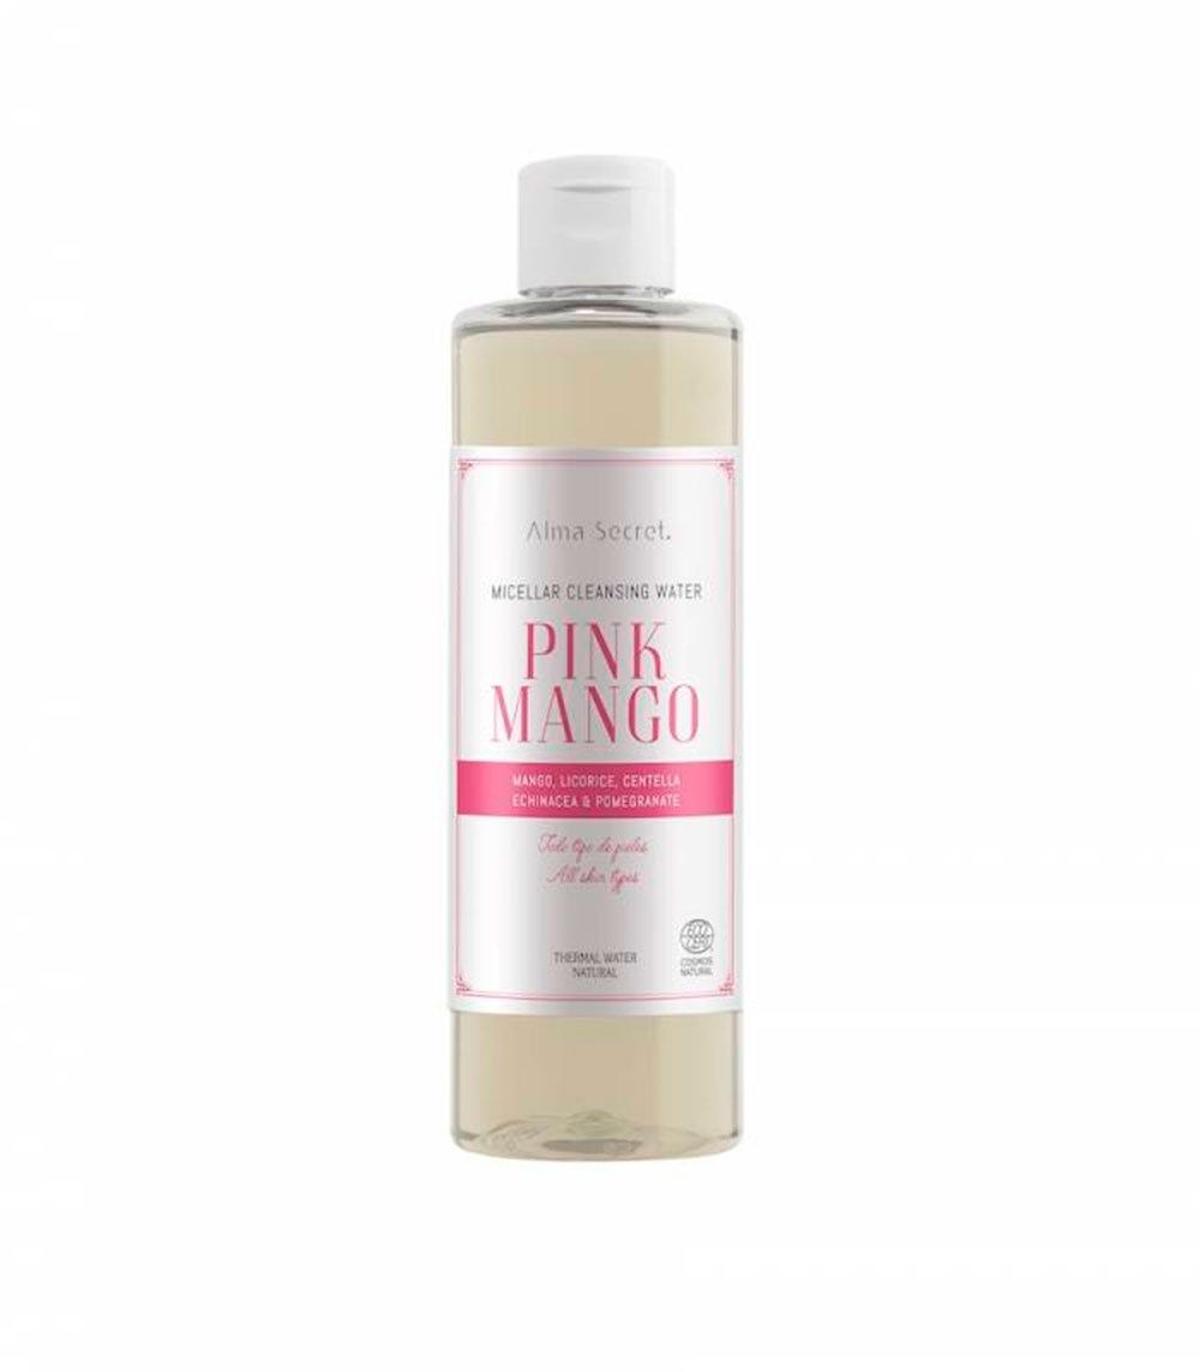 Agua micelar limpiadora Pink Mango de Alma Secret. (Precio: 18,75 euros)